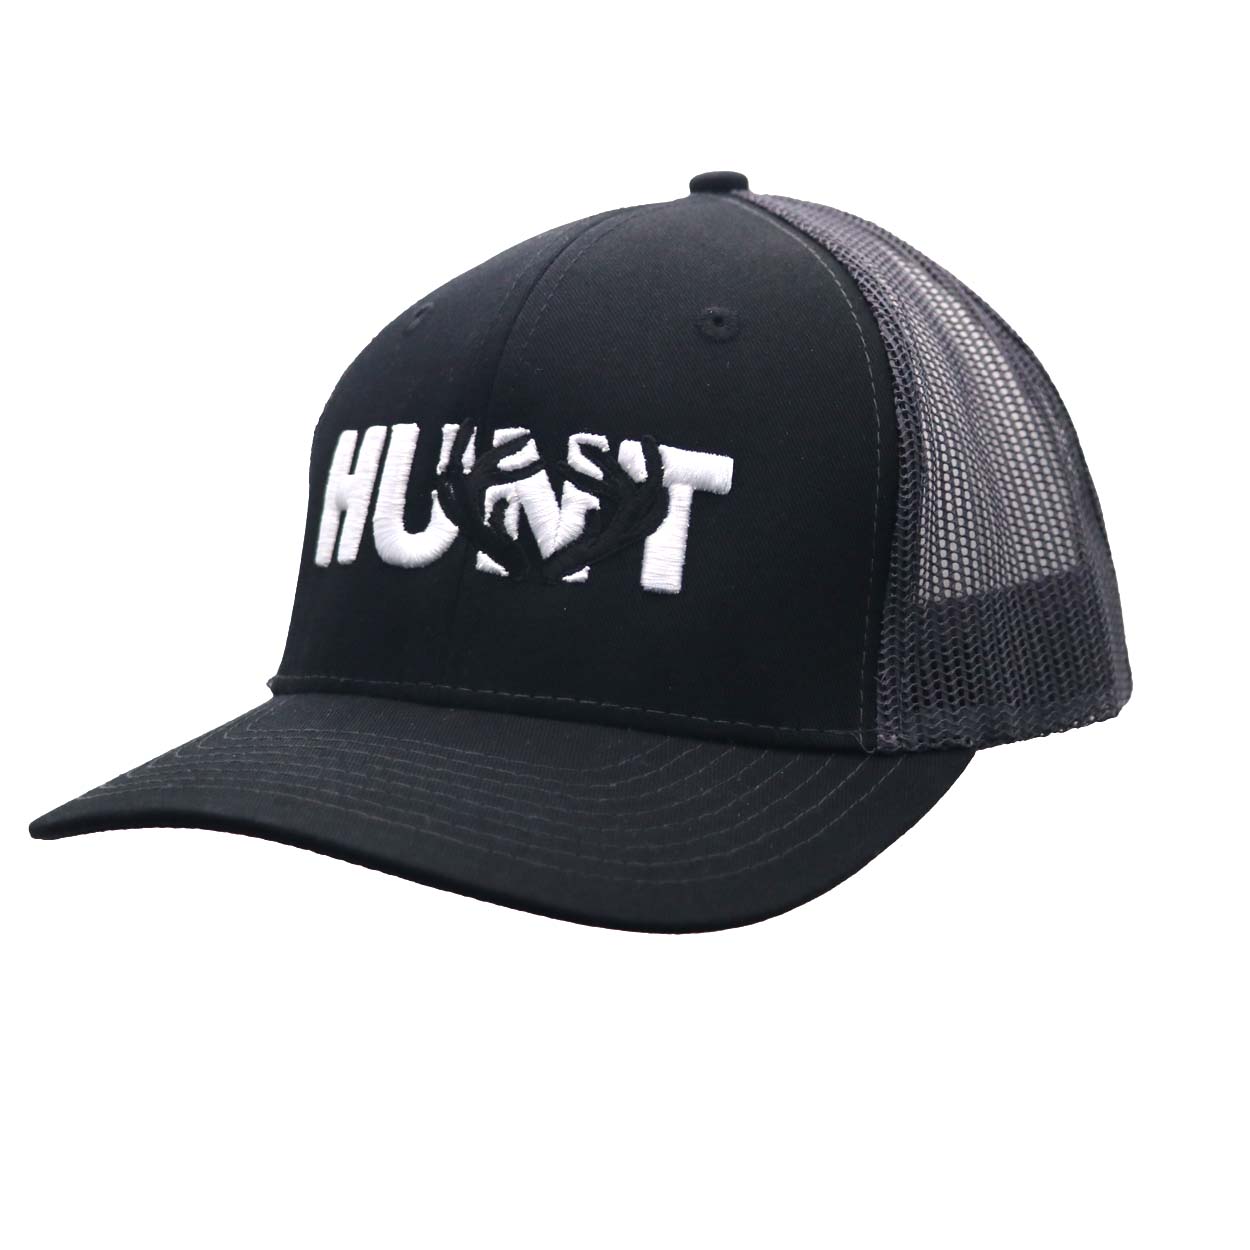 Hunt Rack Logo Classic Embroidered Snapback Trucker Hat Black/Dark Gray